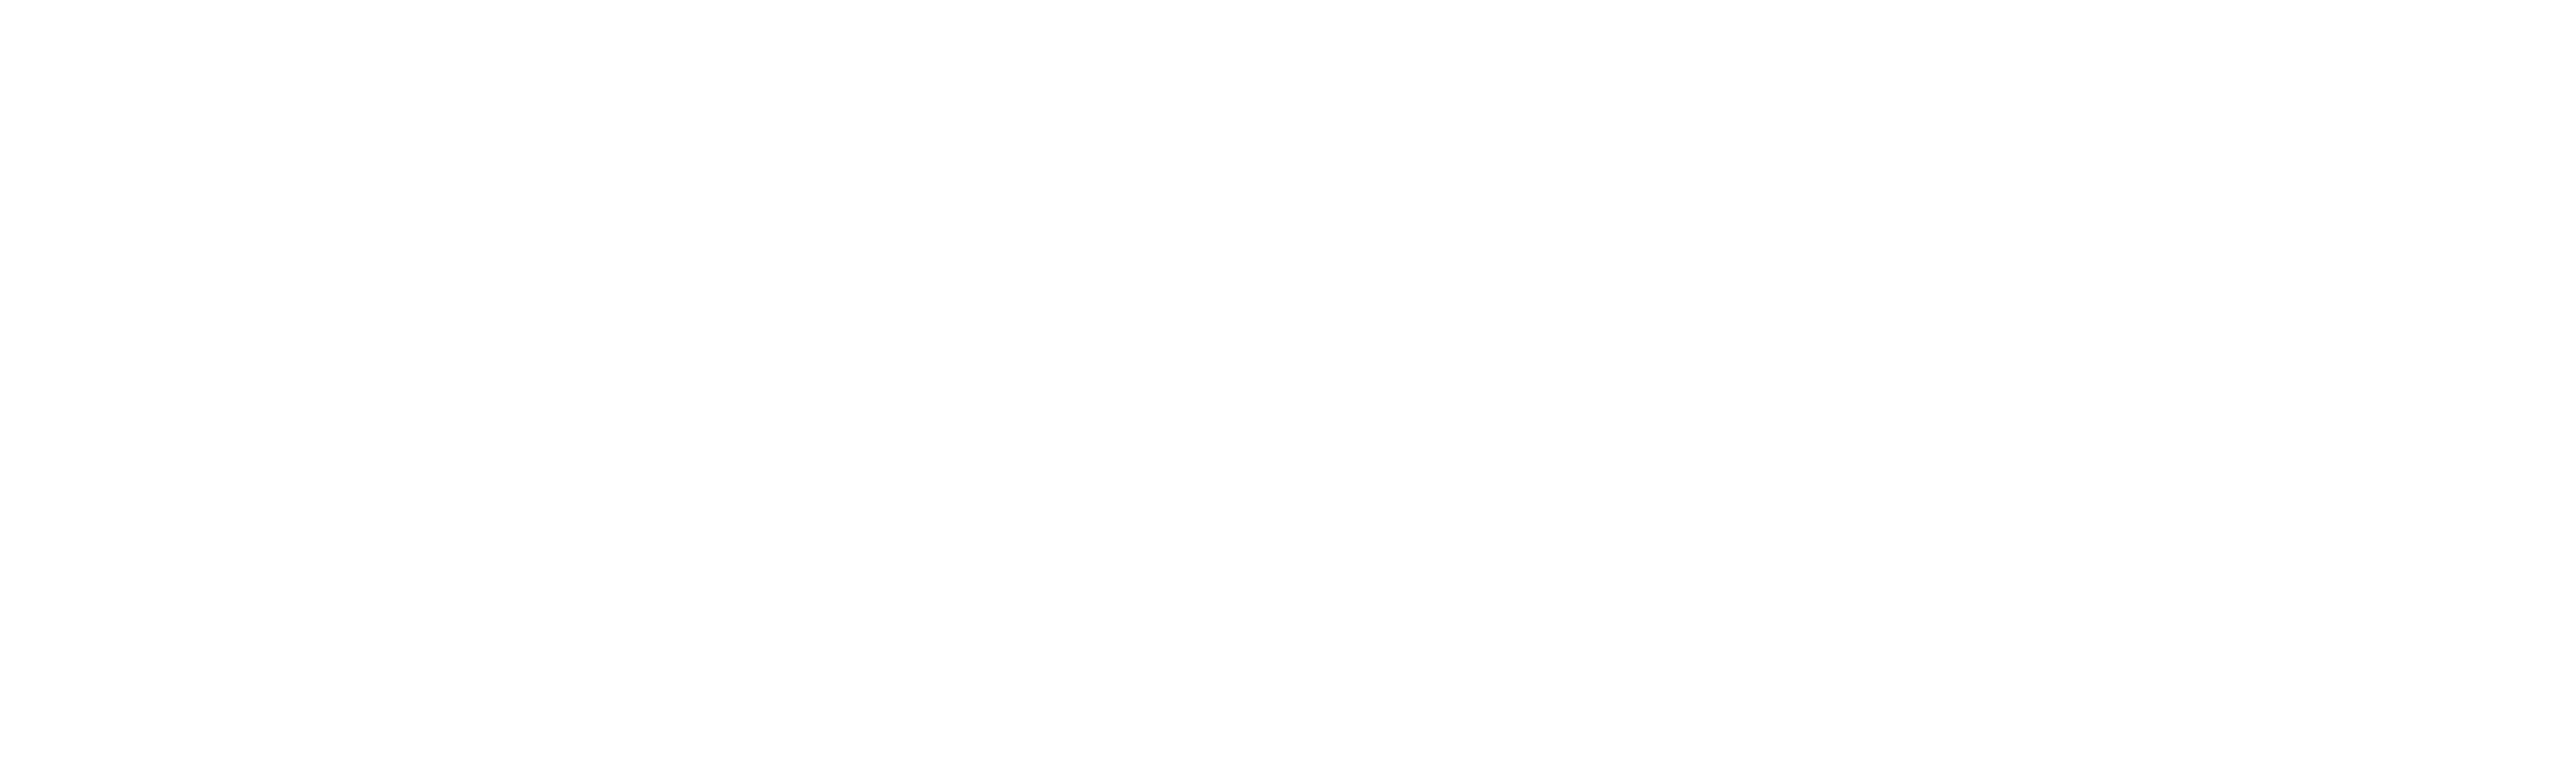 Enginuity Inc.